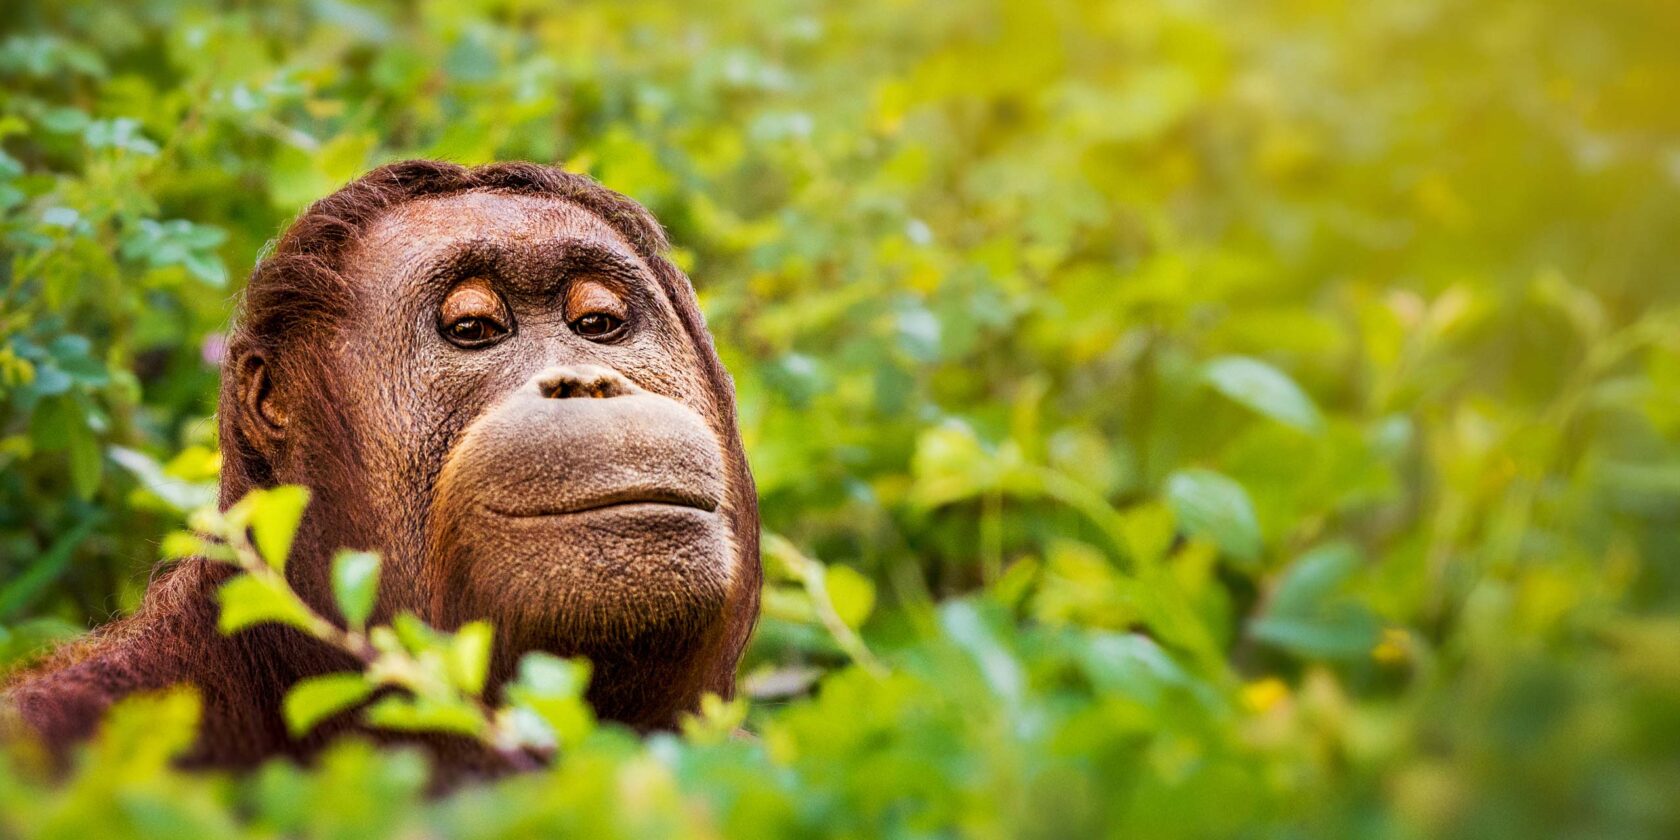 A close up of an orangutan in the wild.